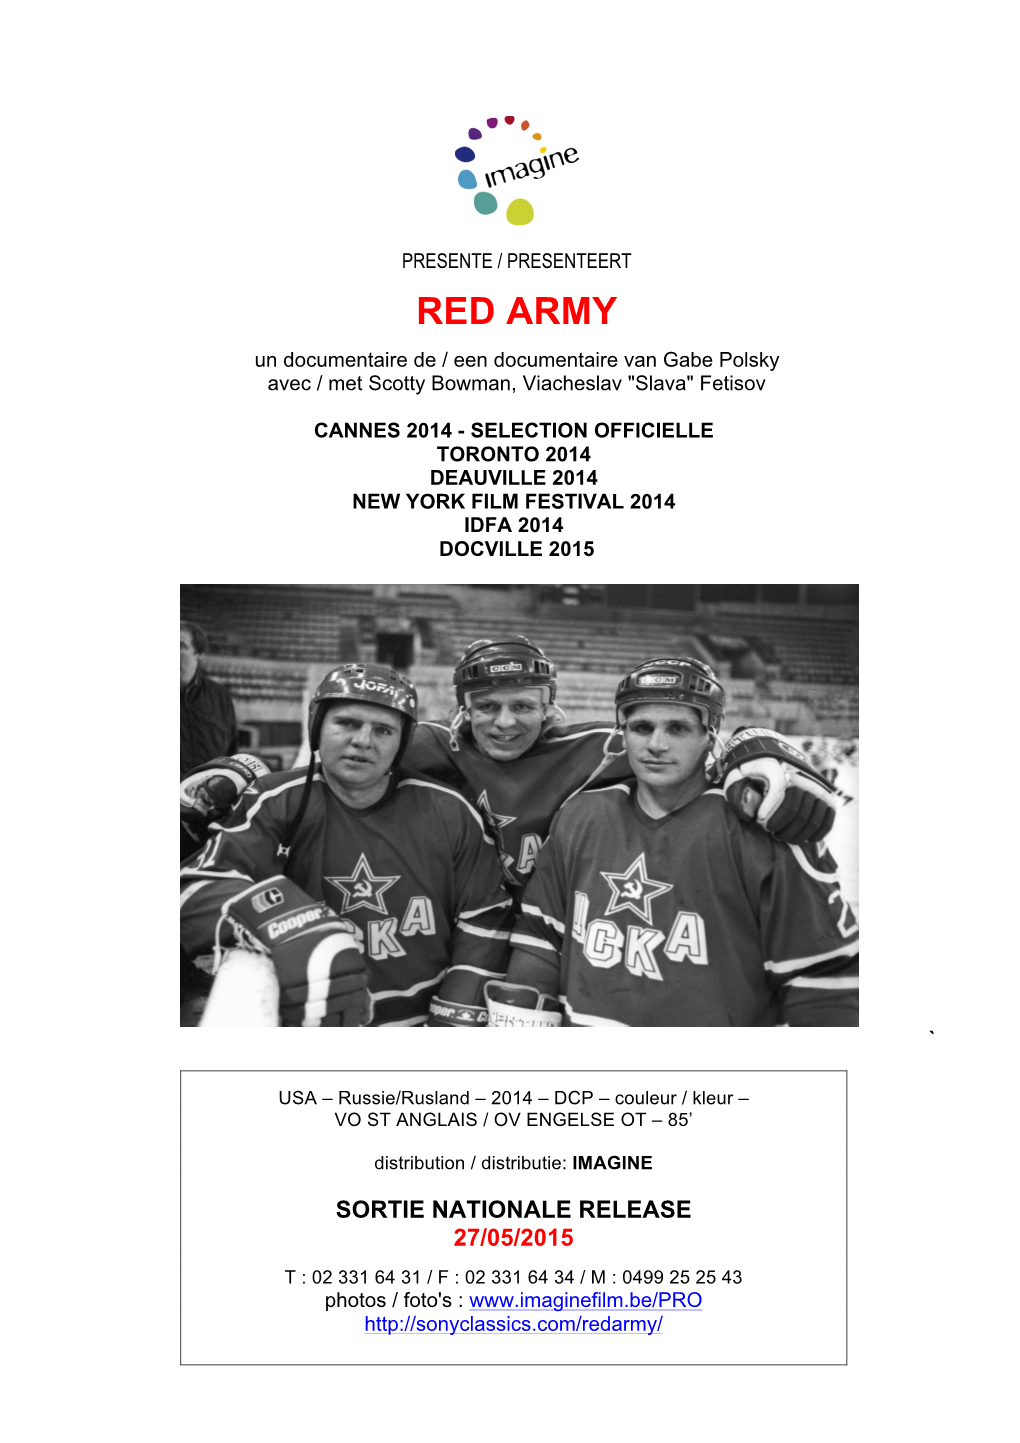 RED ARMY Un Documentaire De / Een Documentaire Van Gabe Polsky Avec / Met Scotty Bowman, Viacheslav "Slava" Fetisov